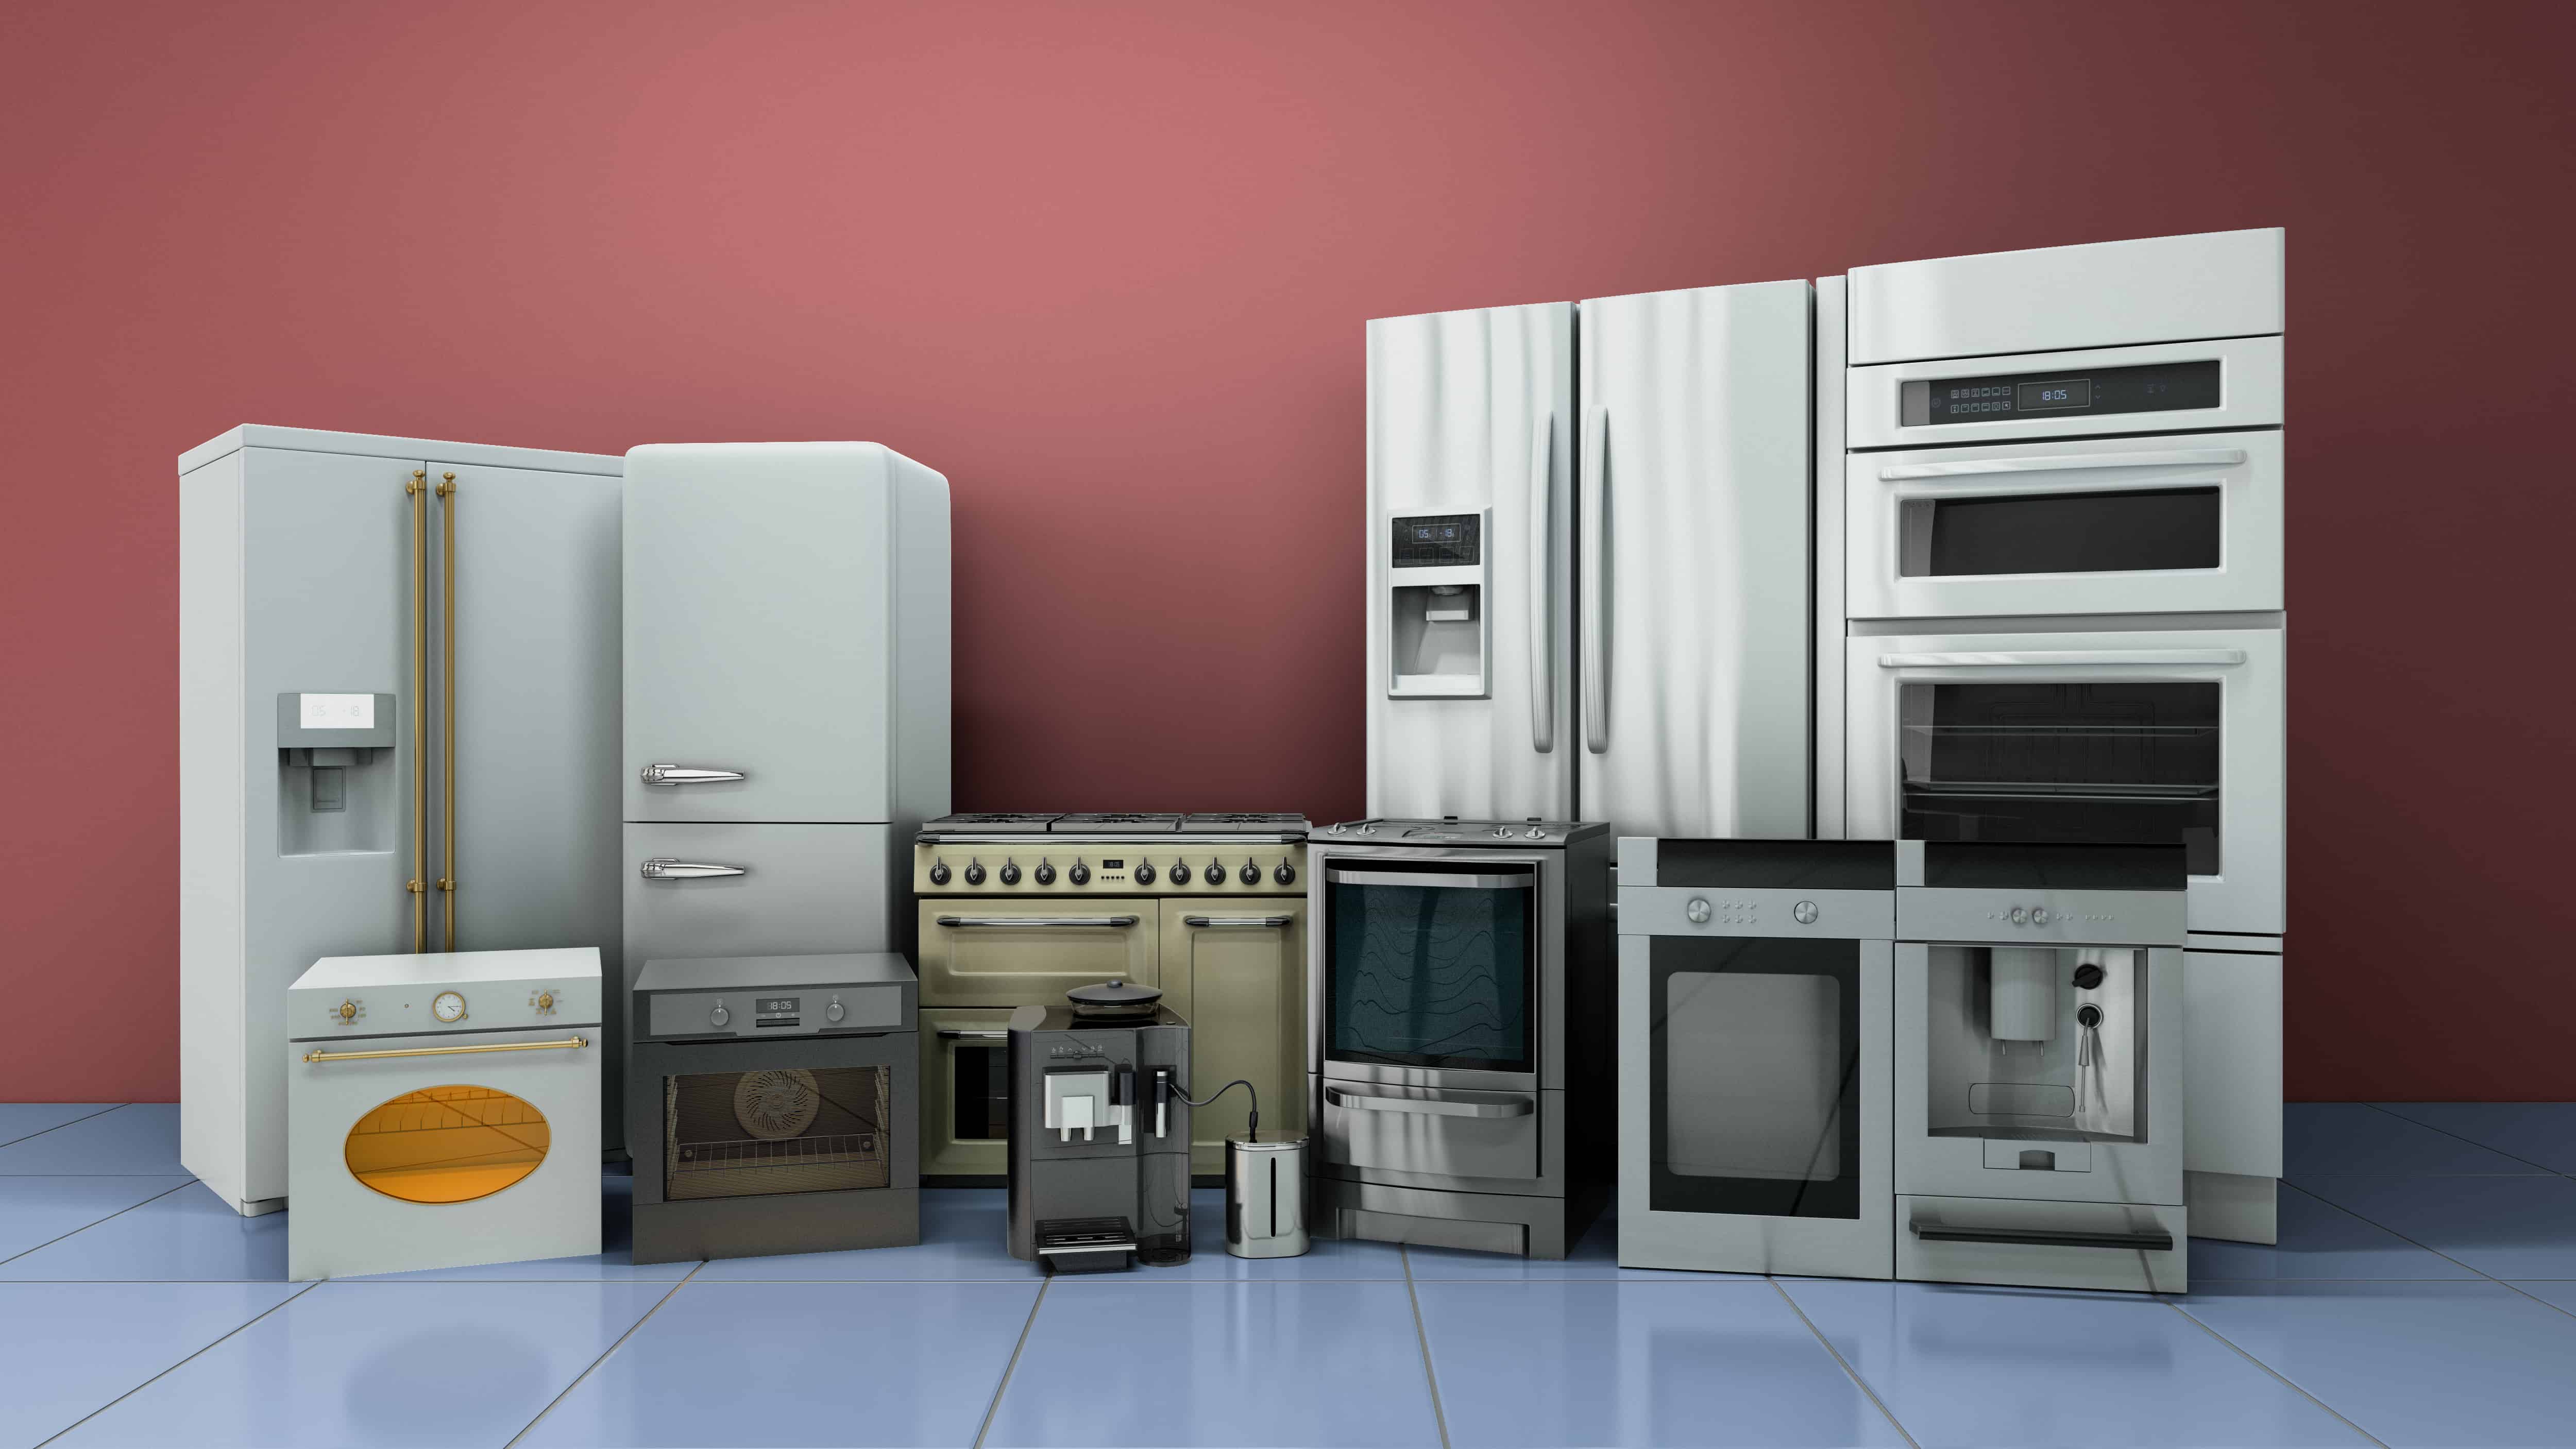 Kitchen,Appliances,In,Supermarcket,3d,Render,Image